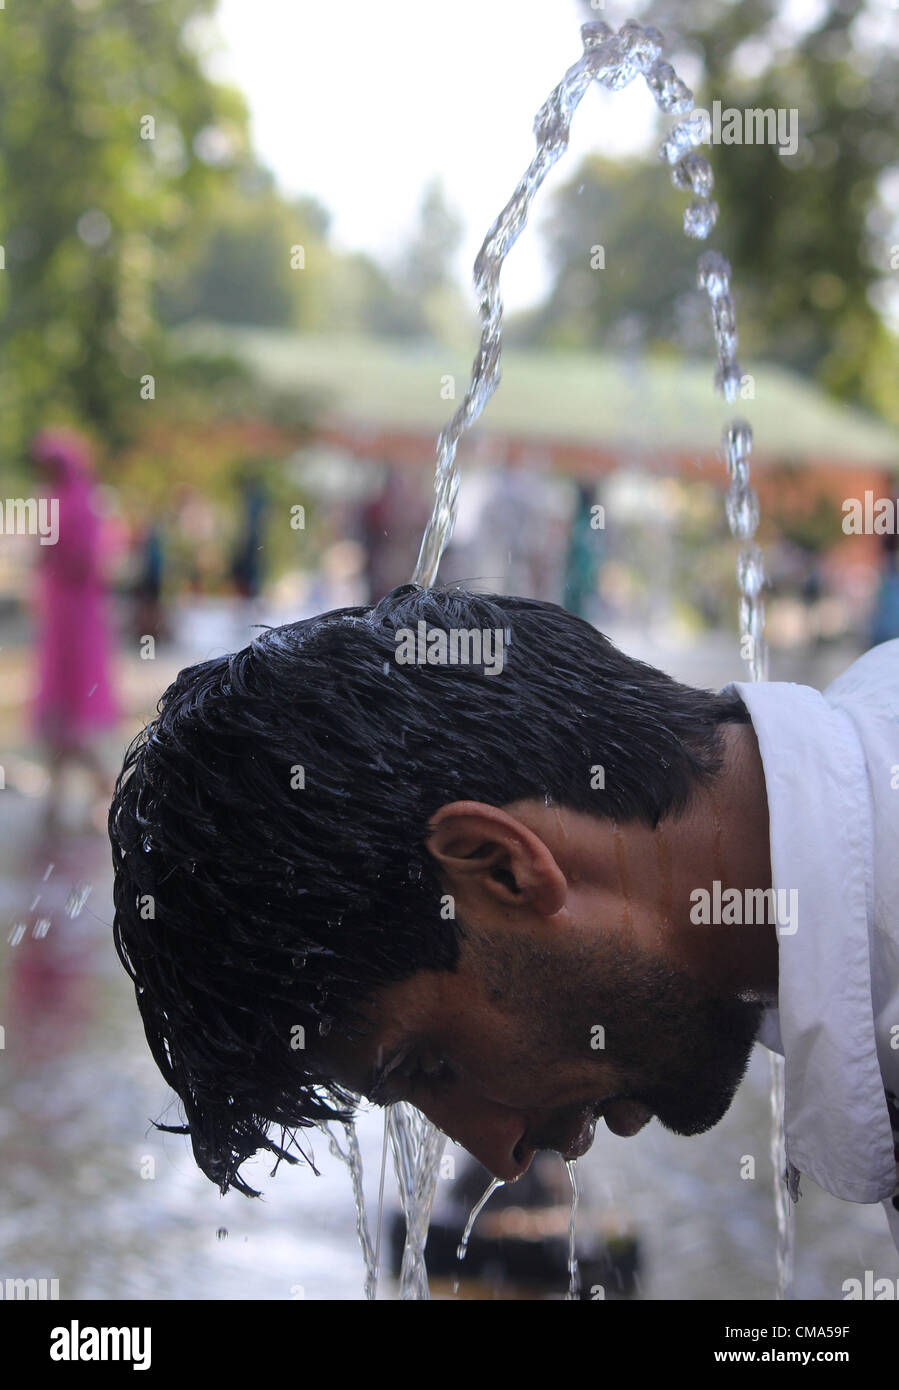 A kashmiri muslim hold  head with fountains  during hot day in srinagar, the summer capiatl of indian kashmir on 1,7,2012 Photo/Altaf Zargar/Zuma Press Stock Photo